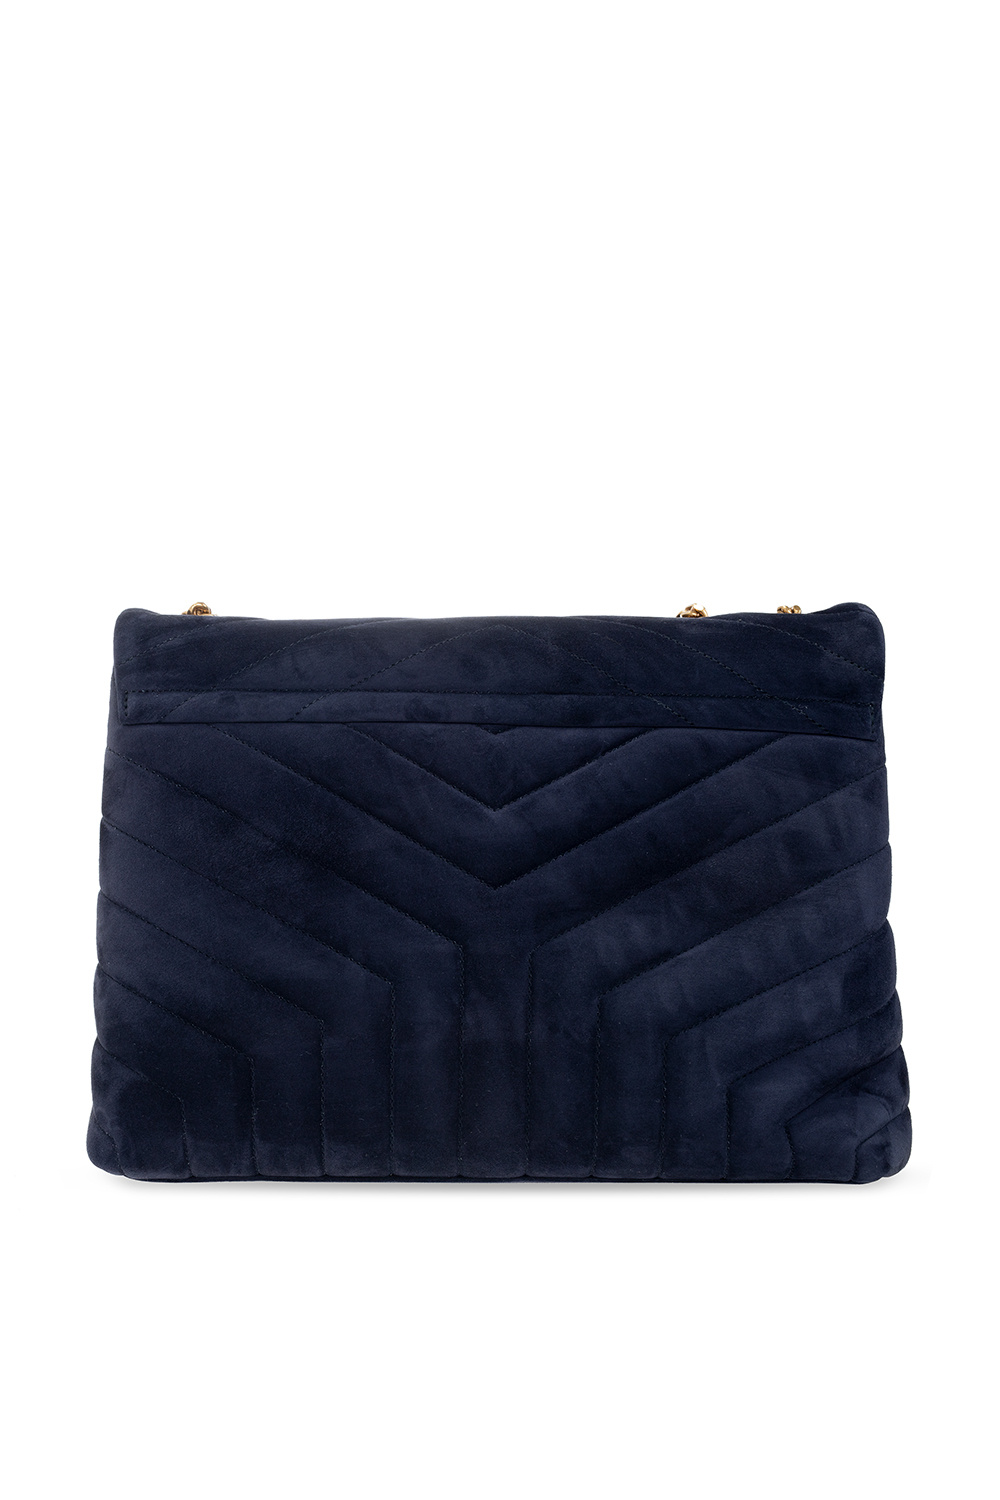 Saint Laurent ‘Loulou Medium’ shoulder bag